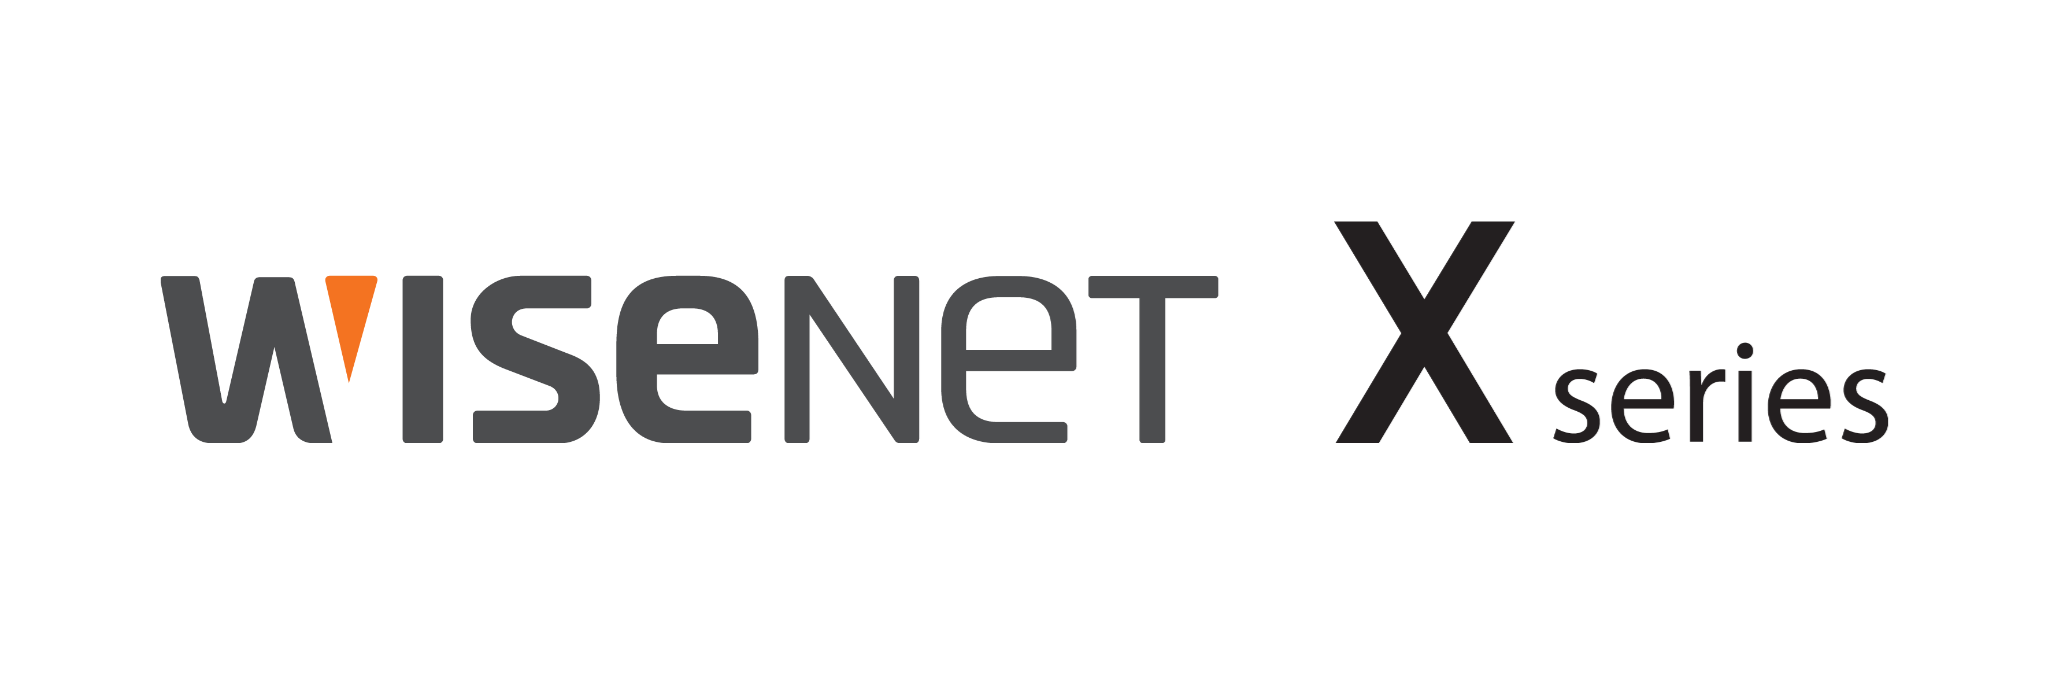 Wisenet X series logo